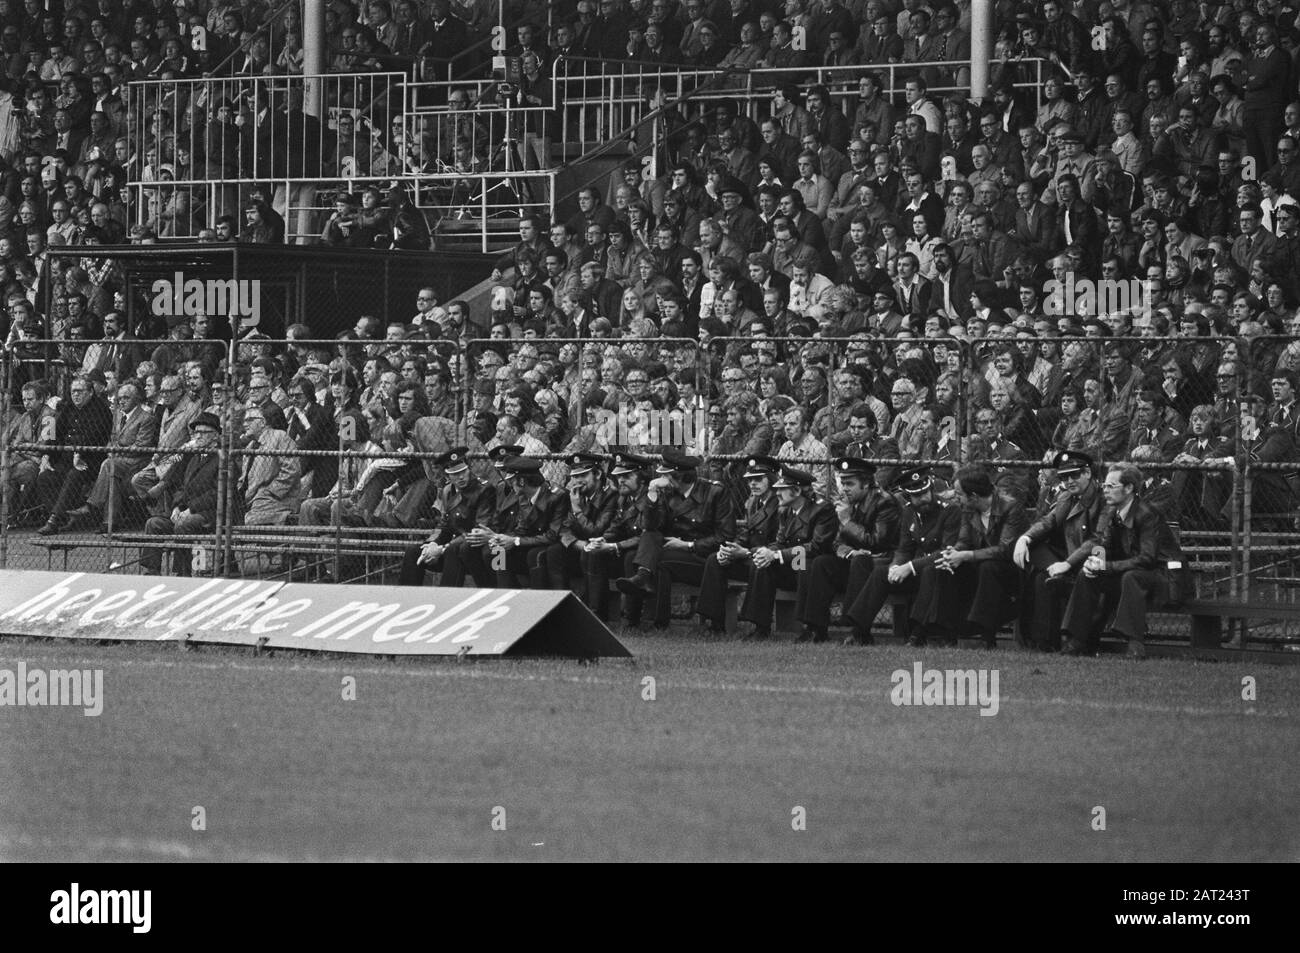 FC Utrecht against PSV 1-0; extra police in Utrecht stadium Date: 26 september 1976 Location: Utrecht Keywords: POLICE, sports, stadiums, football Institution name: FC Utrecht Stock Photo